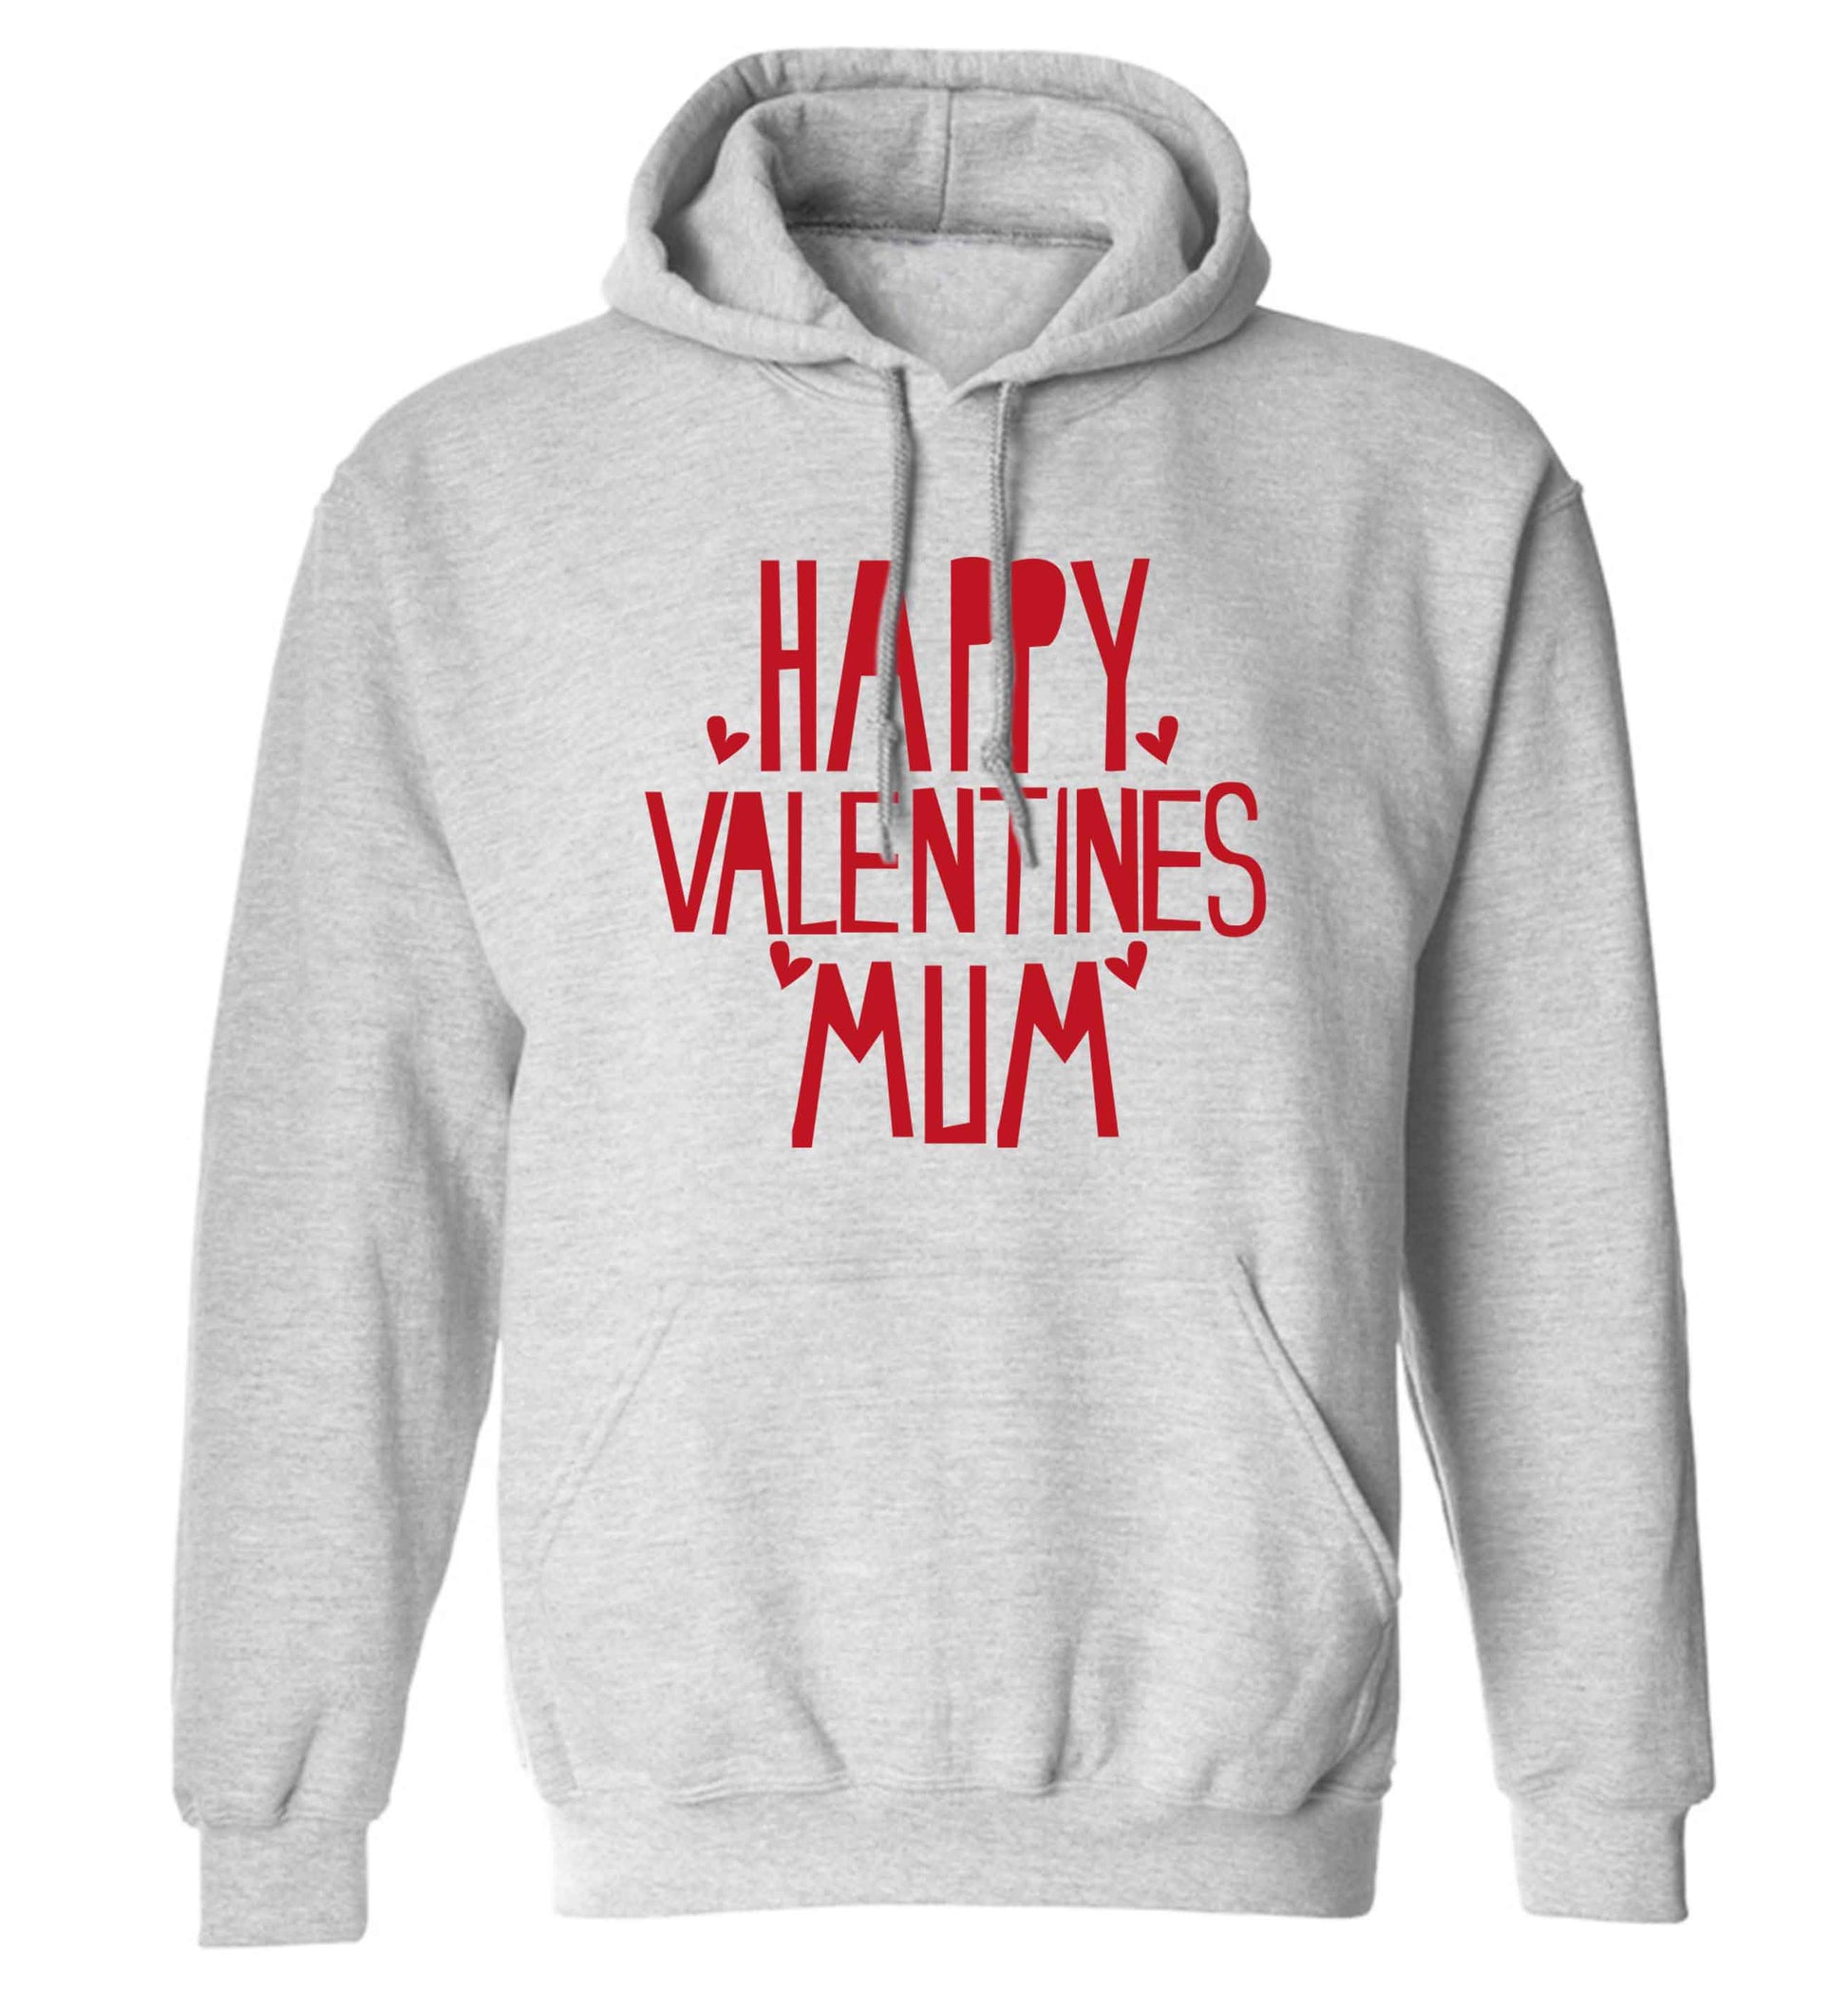 Happy valentines mum adults unisex grey hoodie 2XL